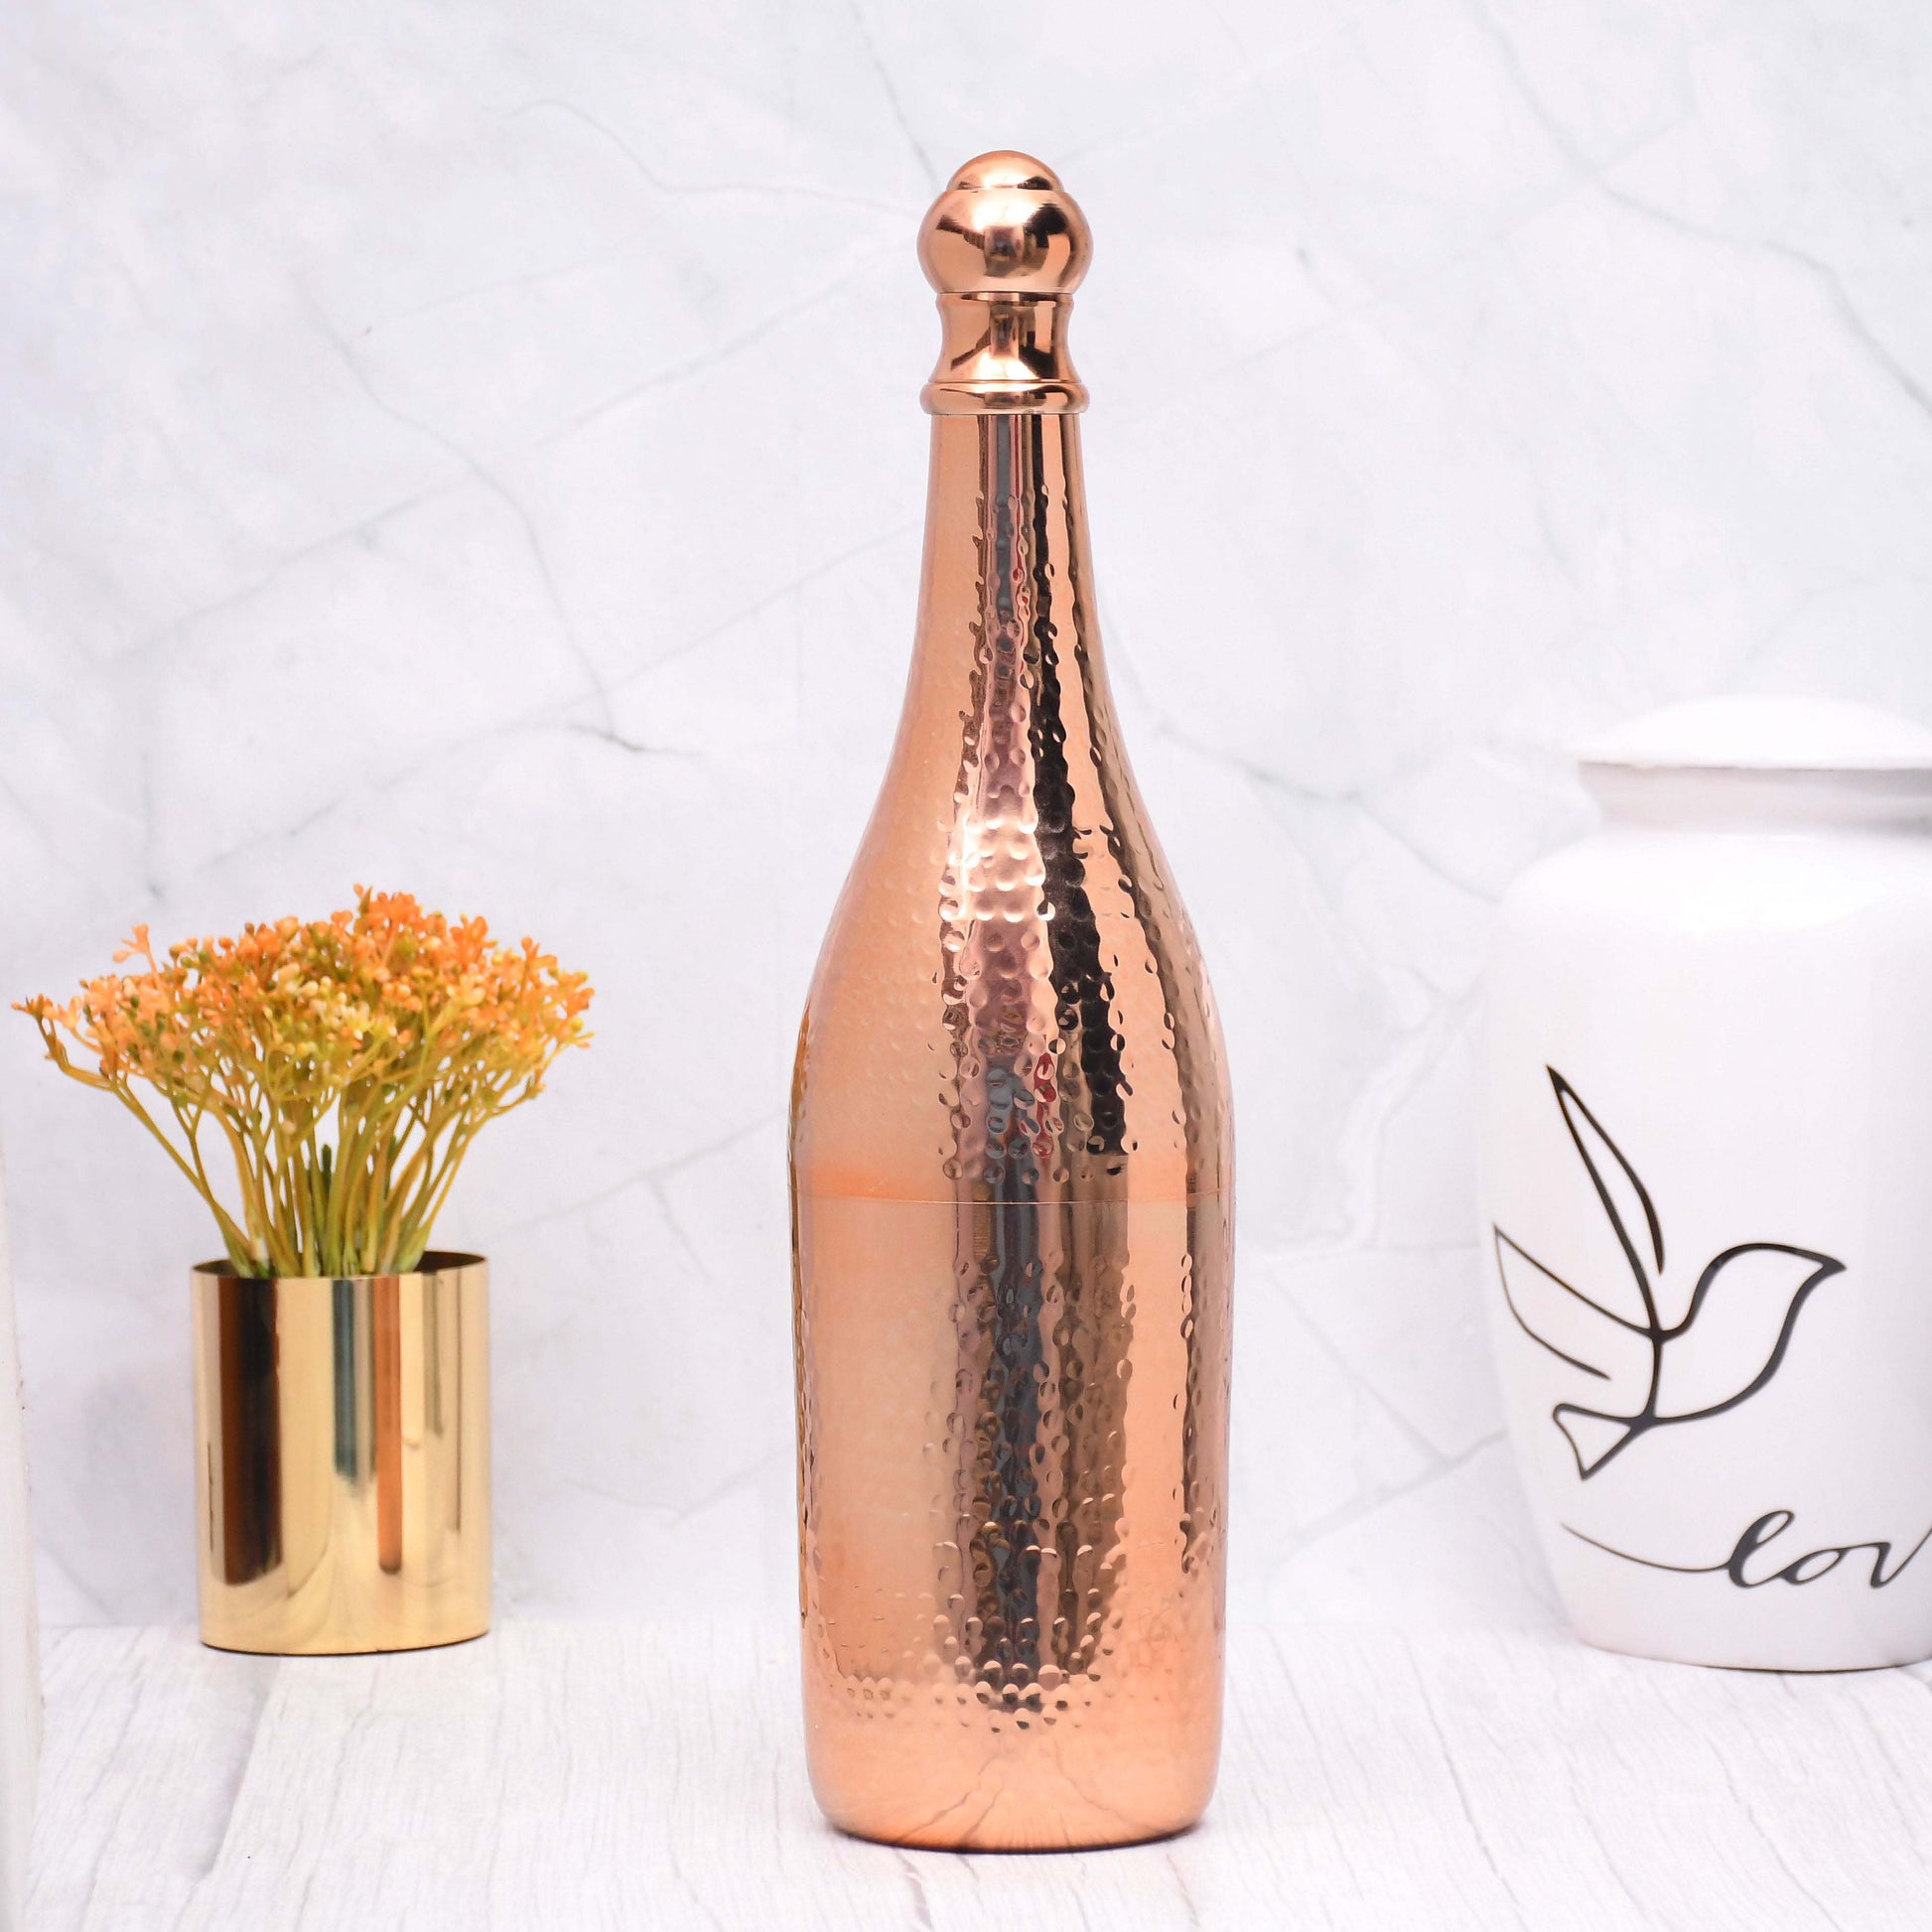 SAMA Homes - bautifullly designed champagne bottle case